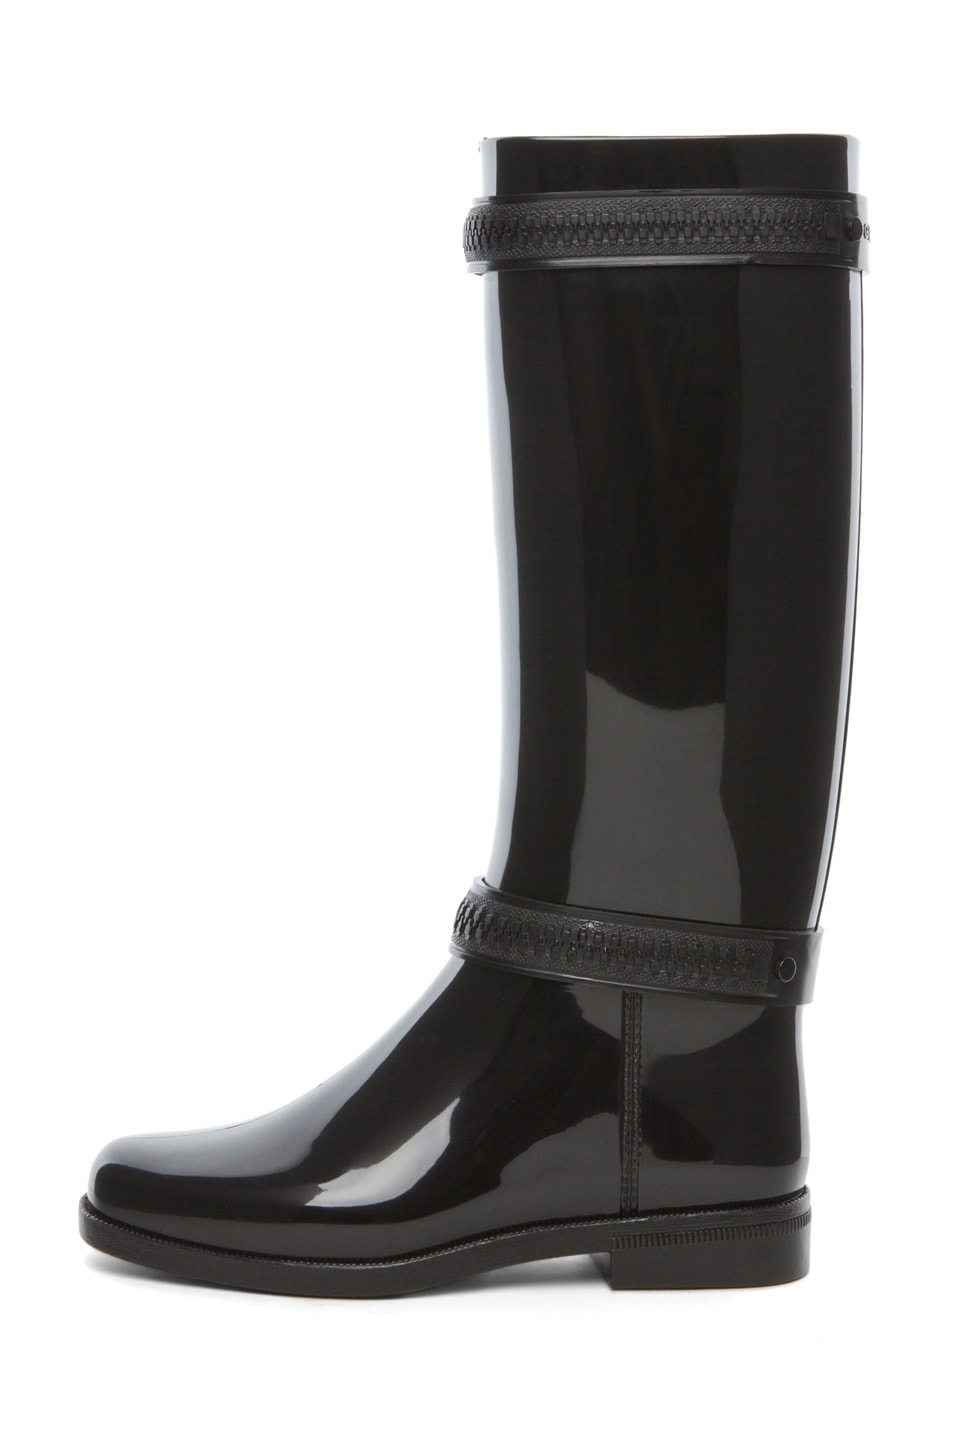 Givenchy Rain Boot in Black | FWRD